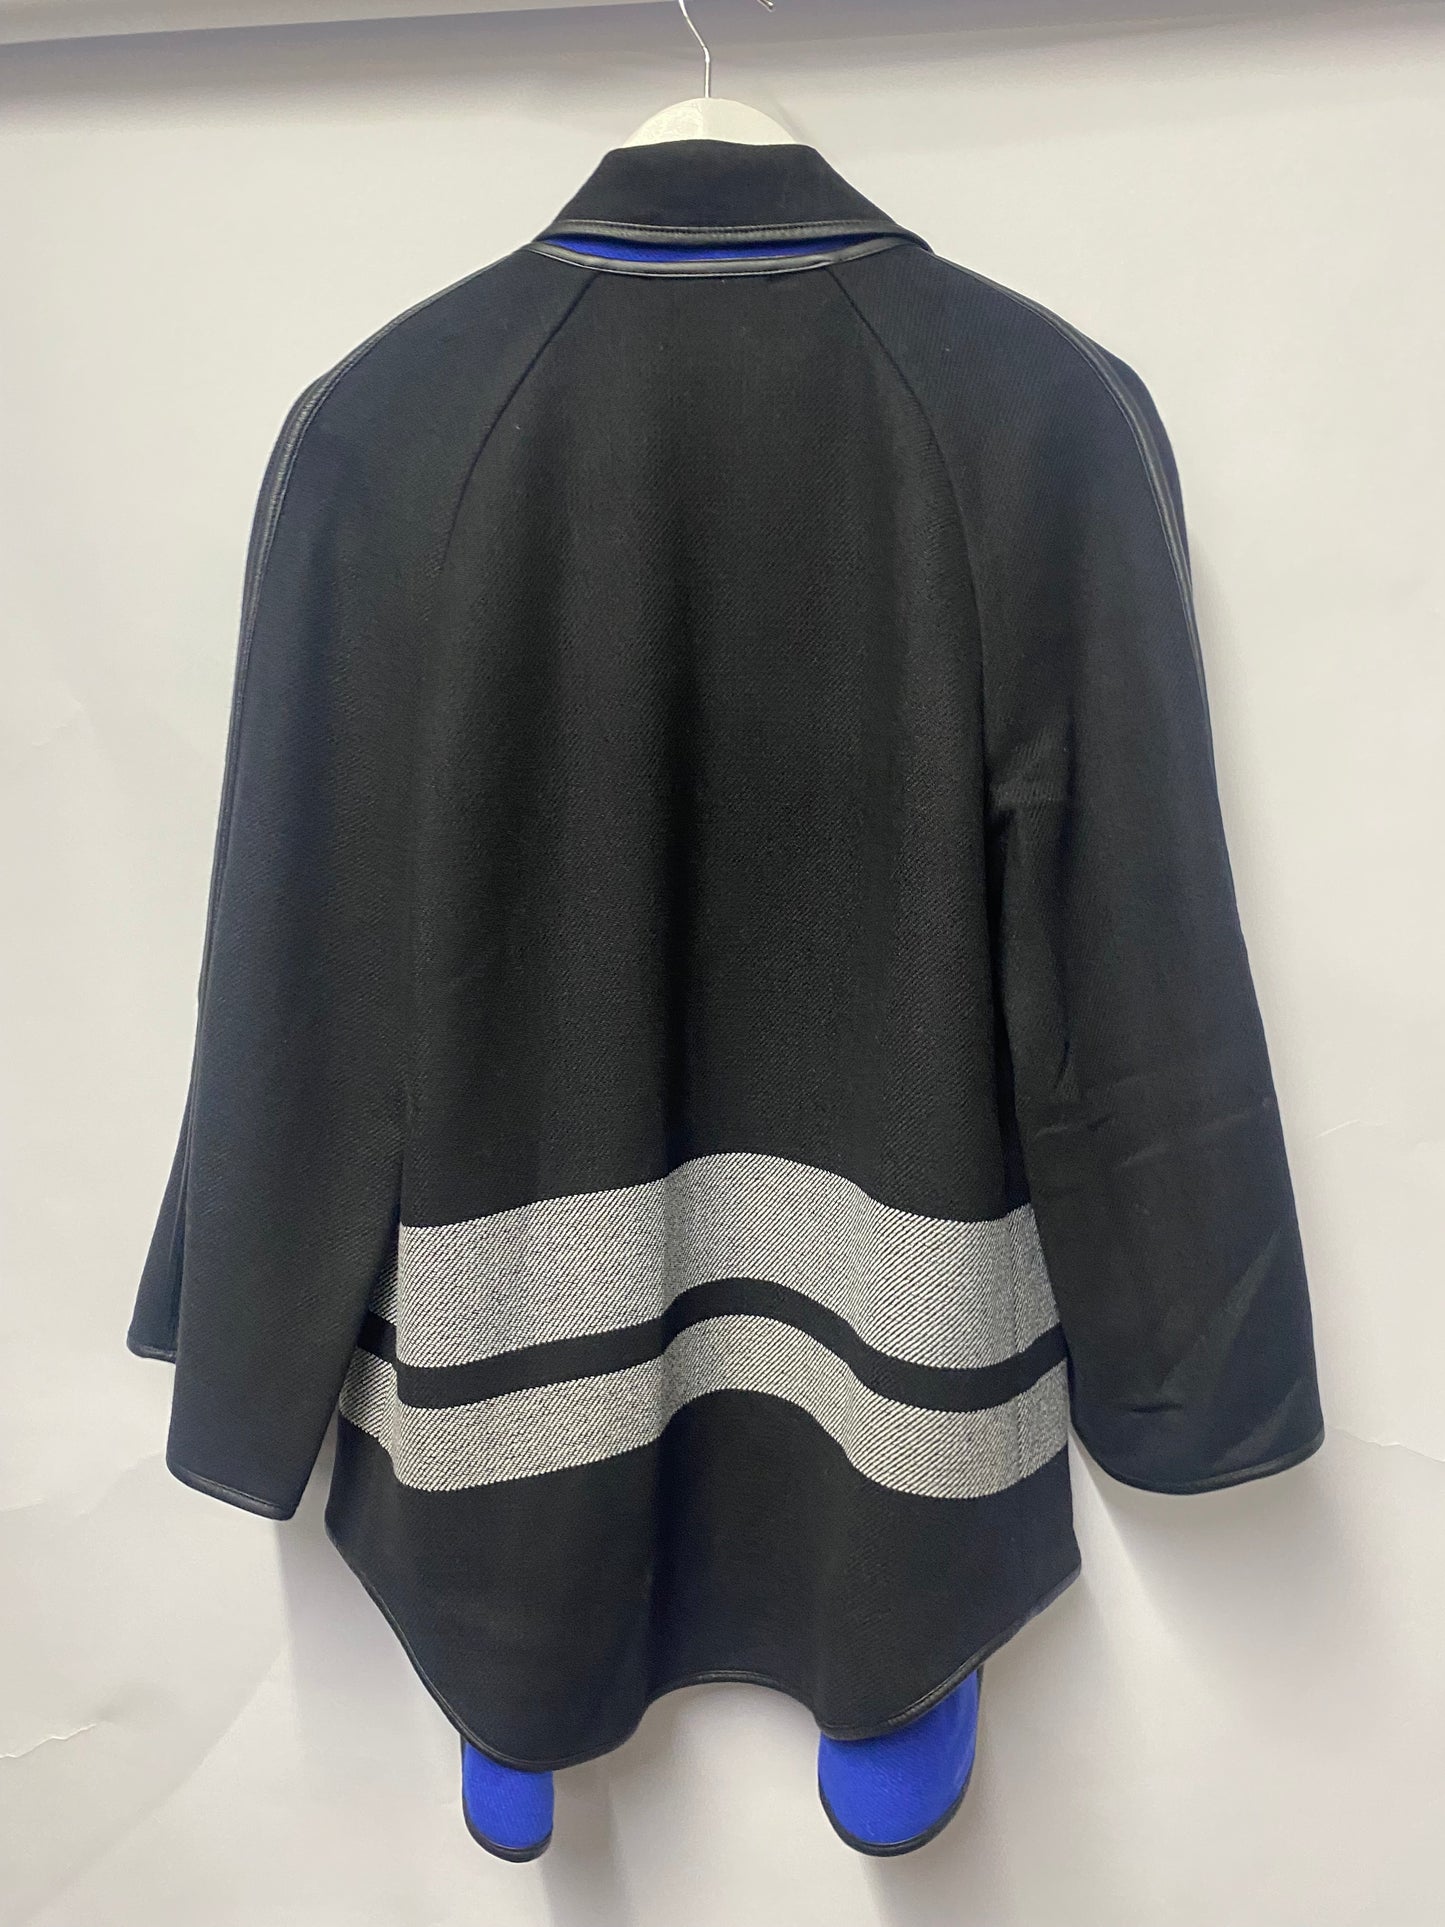 Karen Millen Black, Grey and Blue Cape Style Jacket 10